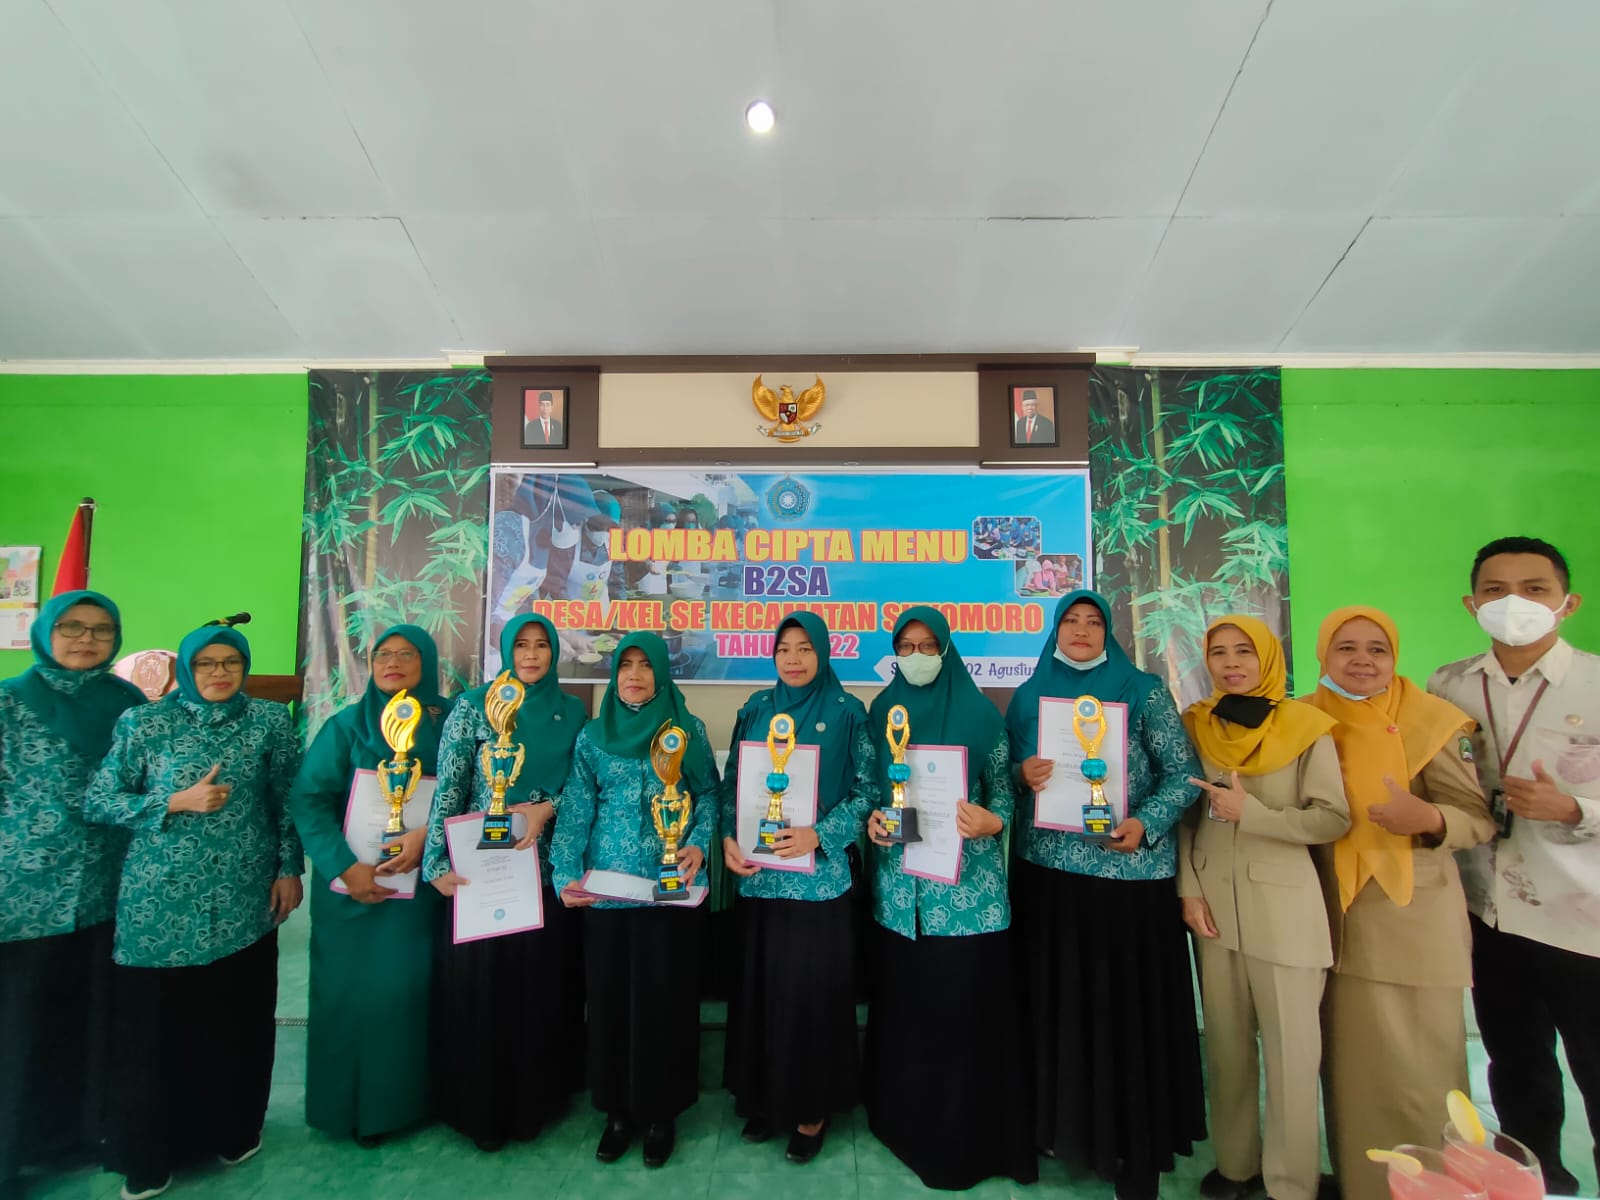 Kegiatan Program Kerja Lomba cipta menu B2SA Desa/Kelurahan Kecamatan Sukomoro tanggal 2 Agustus tahun 2022 di Pendopo Kecamatan Sukomoro